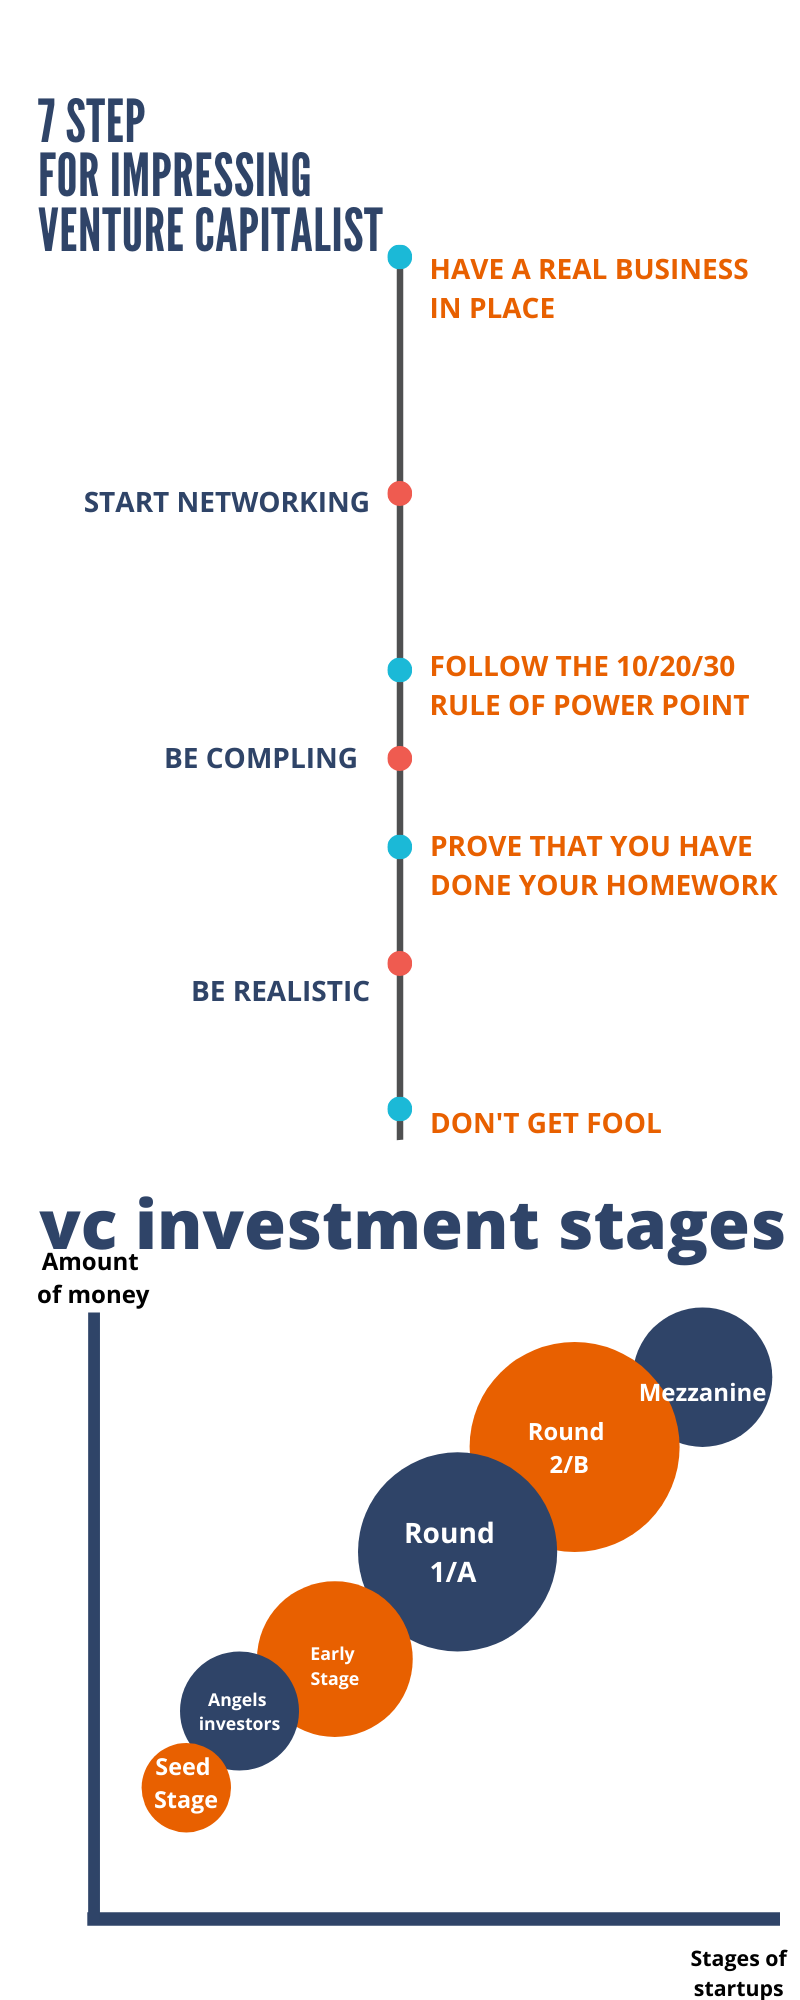 7 steps for impressing venture capitalist